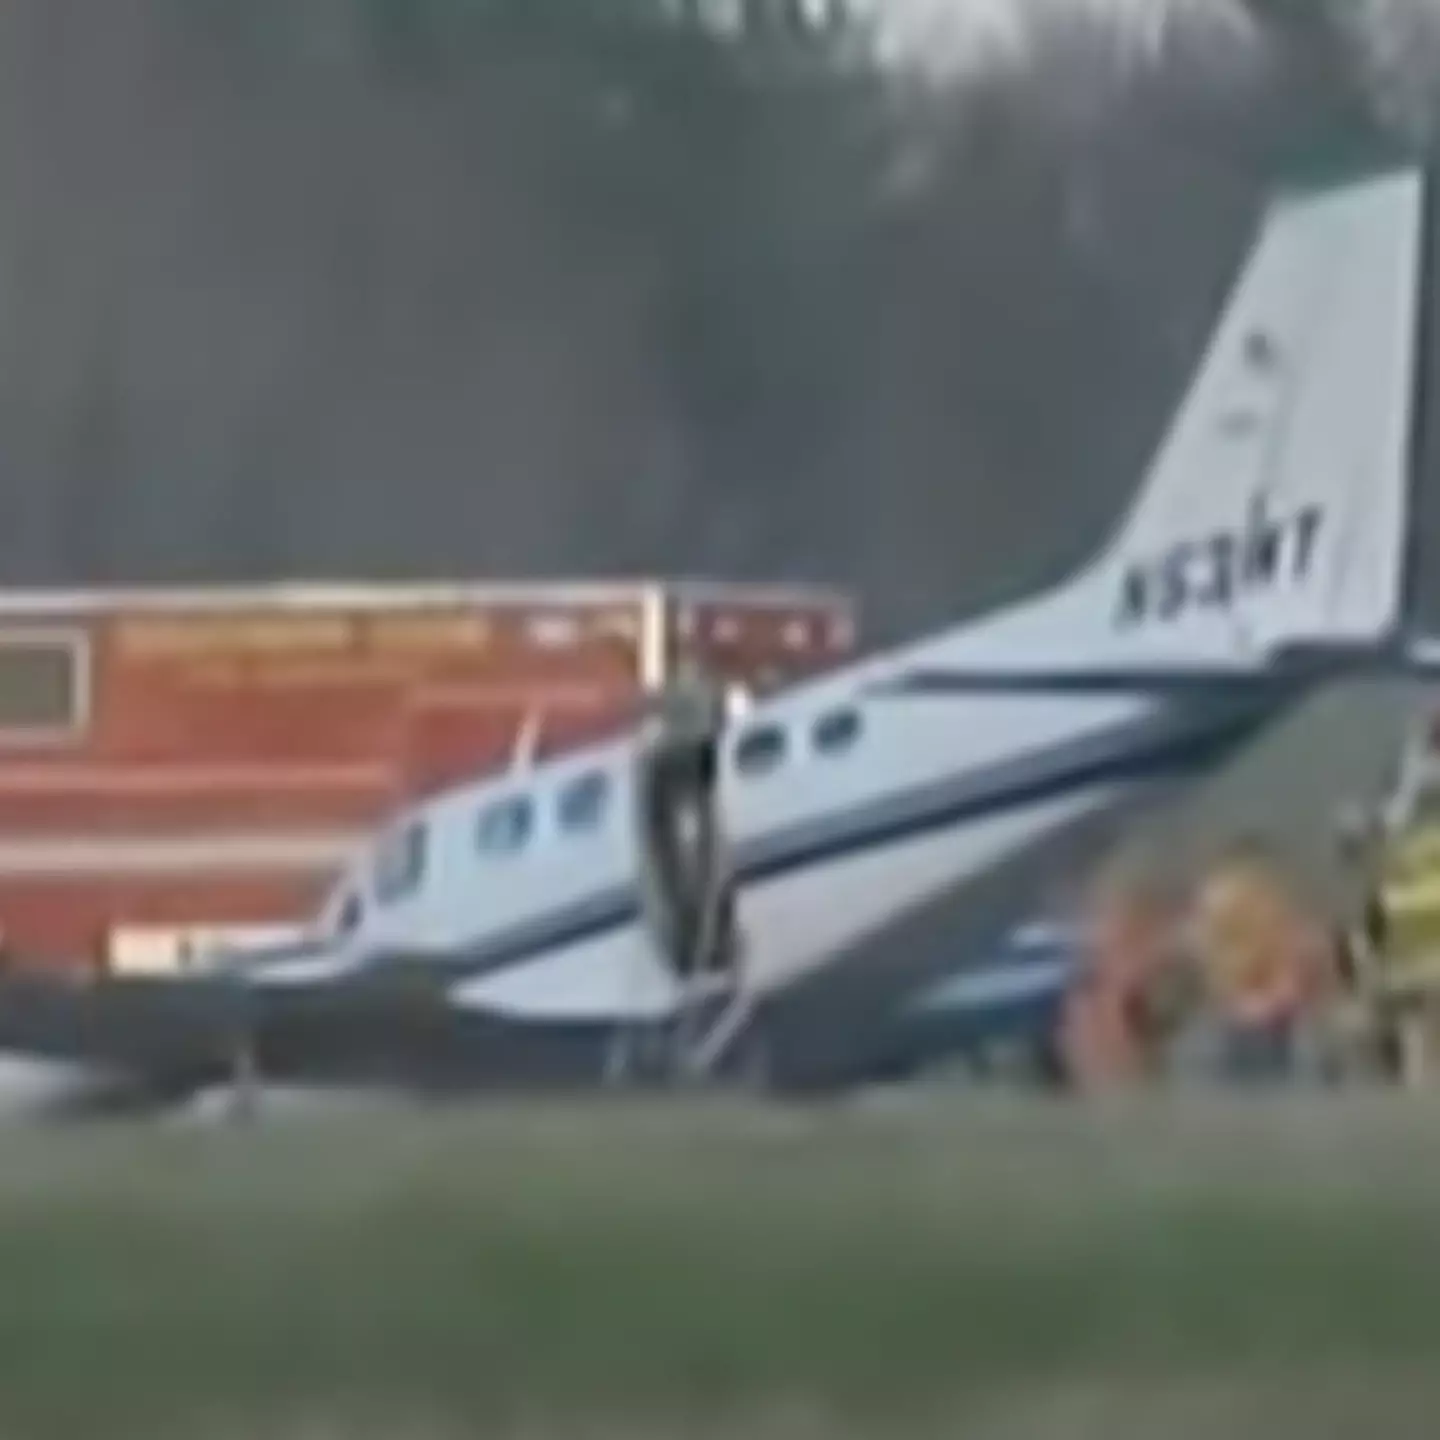 Heartbreaking audio captured moment elderly woman lands plane after pilot-husband dies during flight